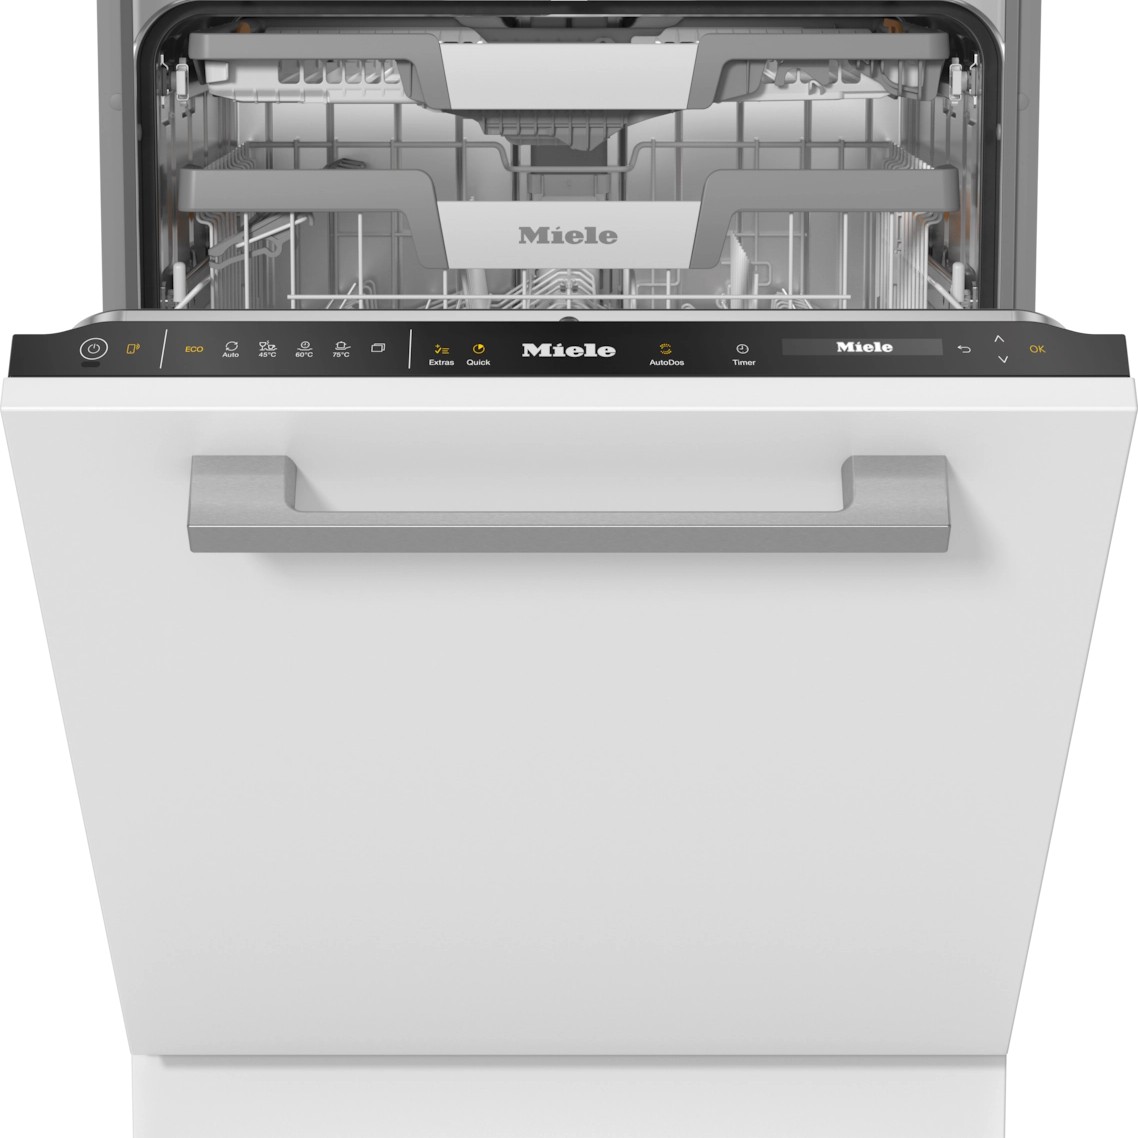 Встраиваемая посудомоечная машина Miele G 7650 SCVi встраиваемая посудомоечная машина miele g 5260 scvi active plus